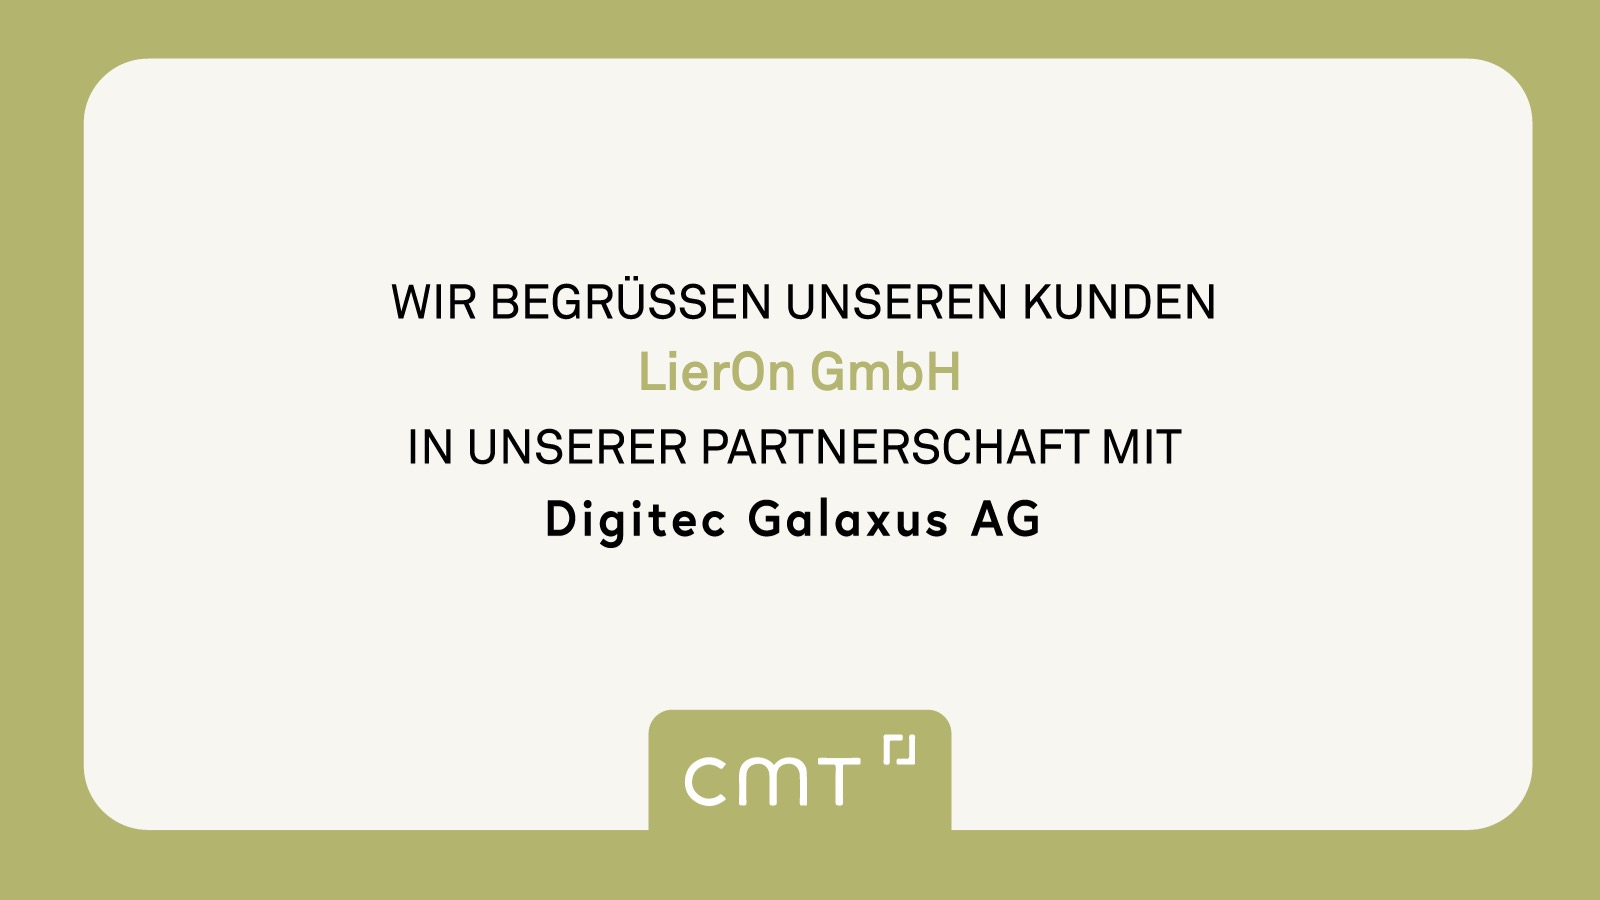 cmt Digitec Galaxus AG- LierOn GmbH